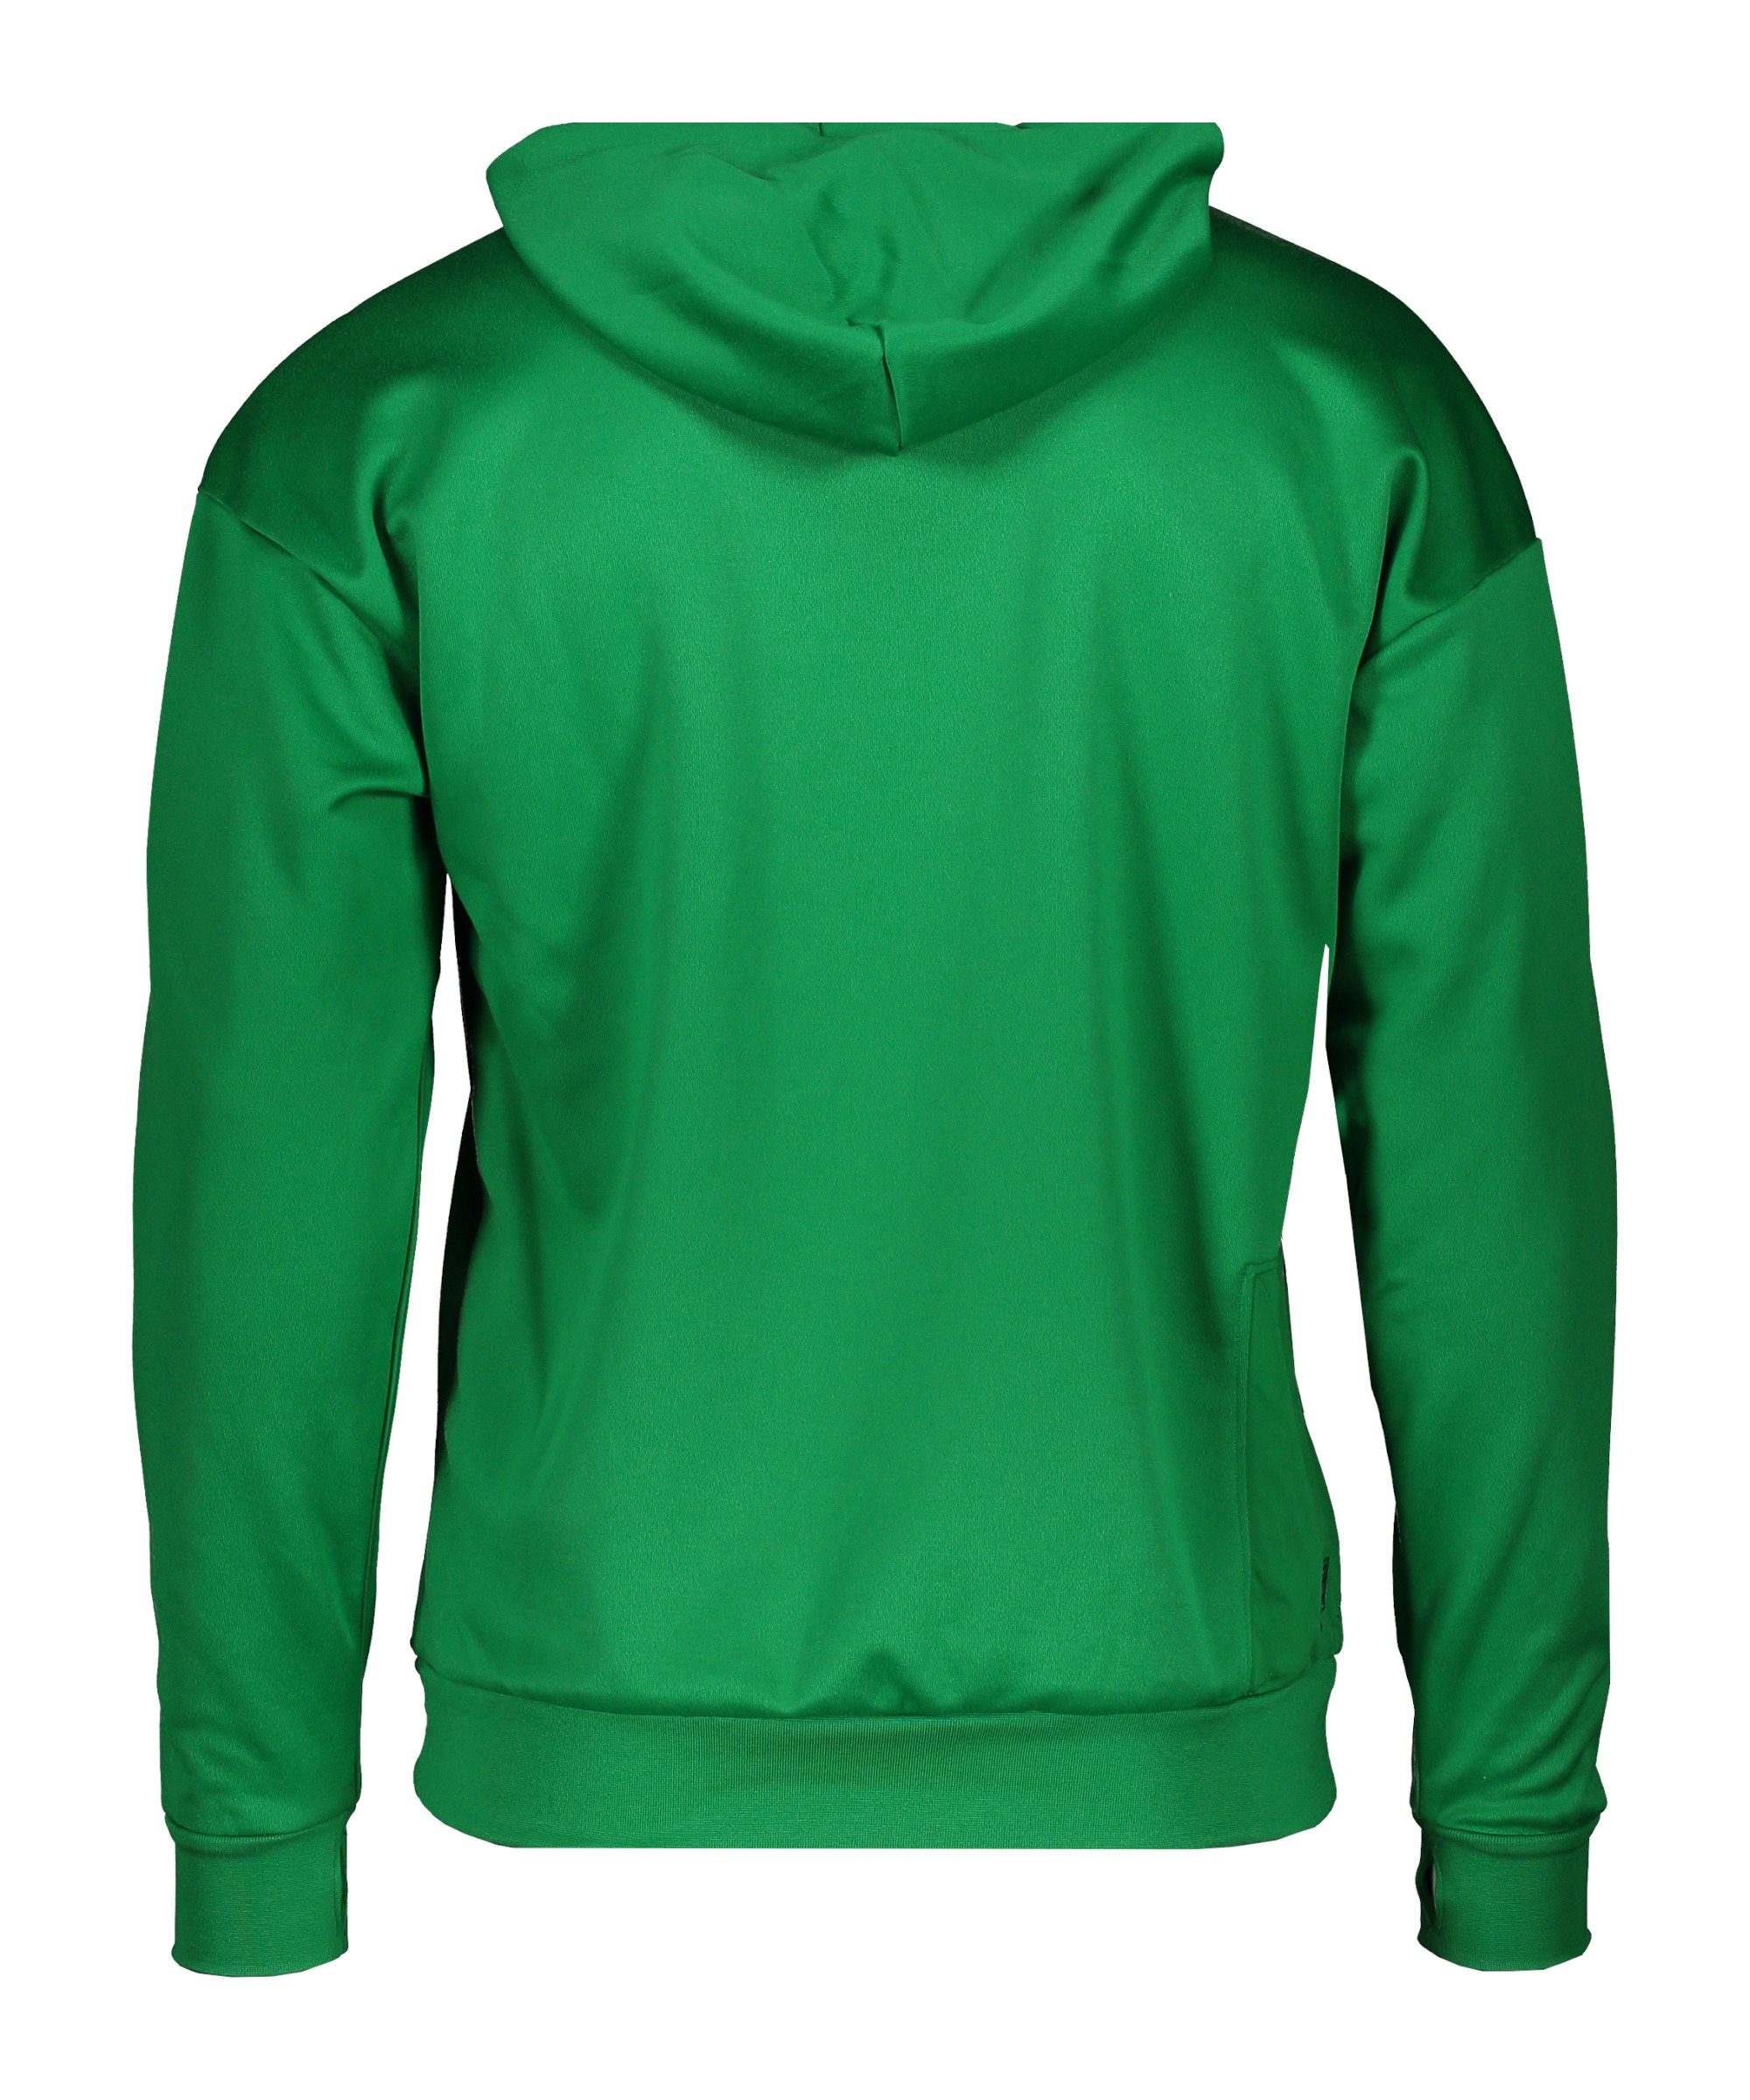 Nike Hoody "Naija" Sportswear Nigeria Sweatshirt